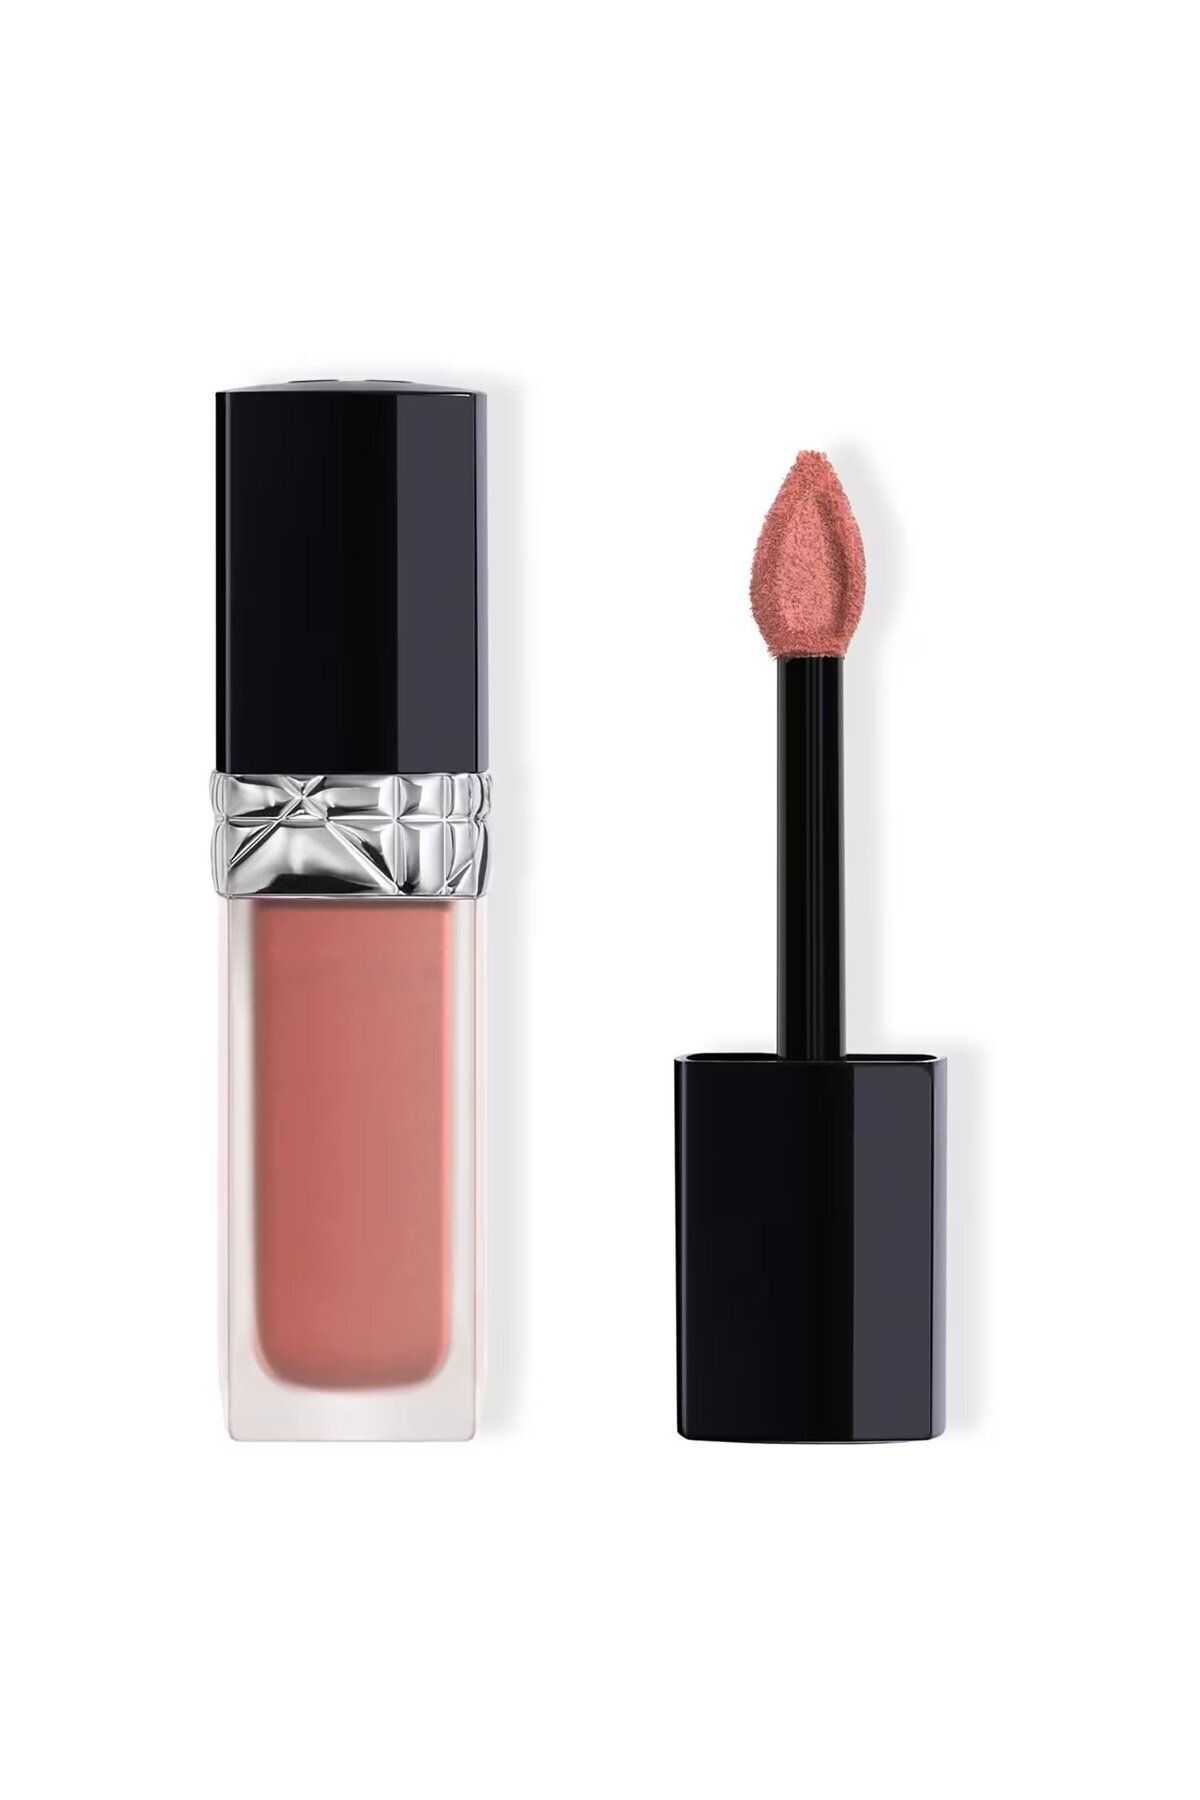 Dior 12 Hours Lasting, Vibrant Matte Finish Liquid Lipstick 6 ml-100 Forever Nude PSSNS837